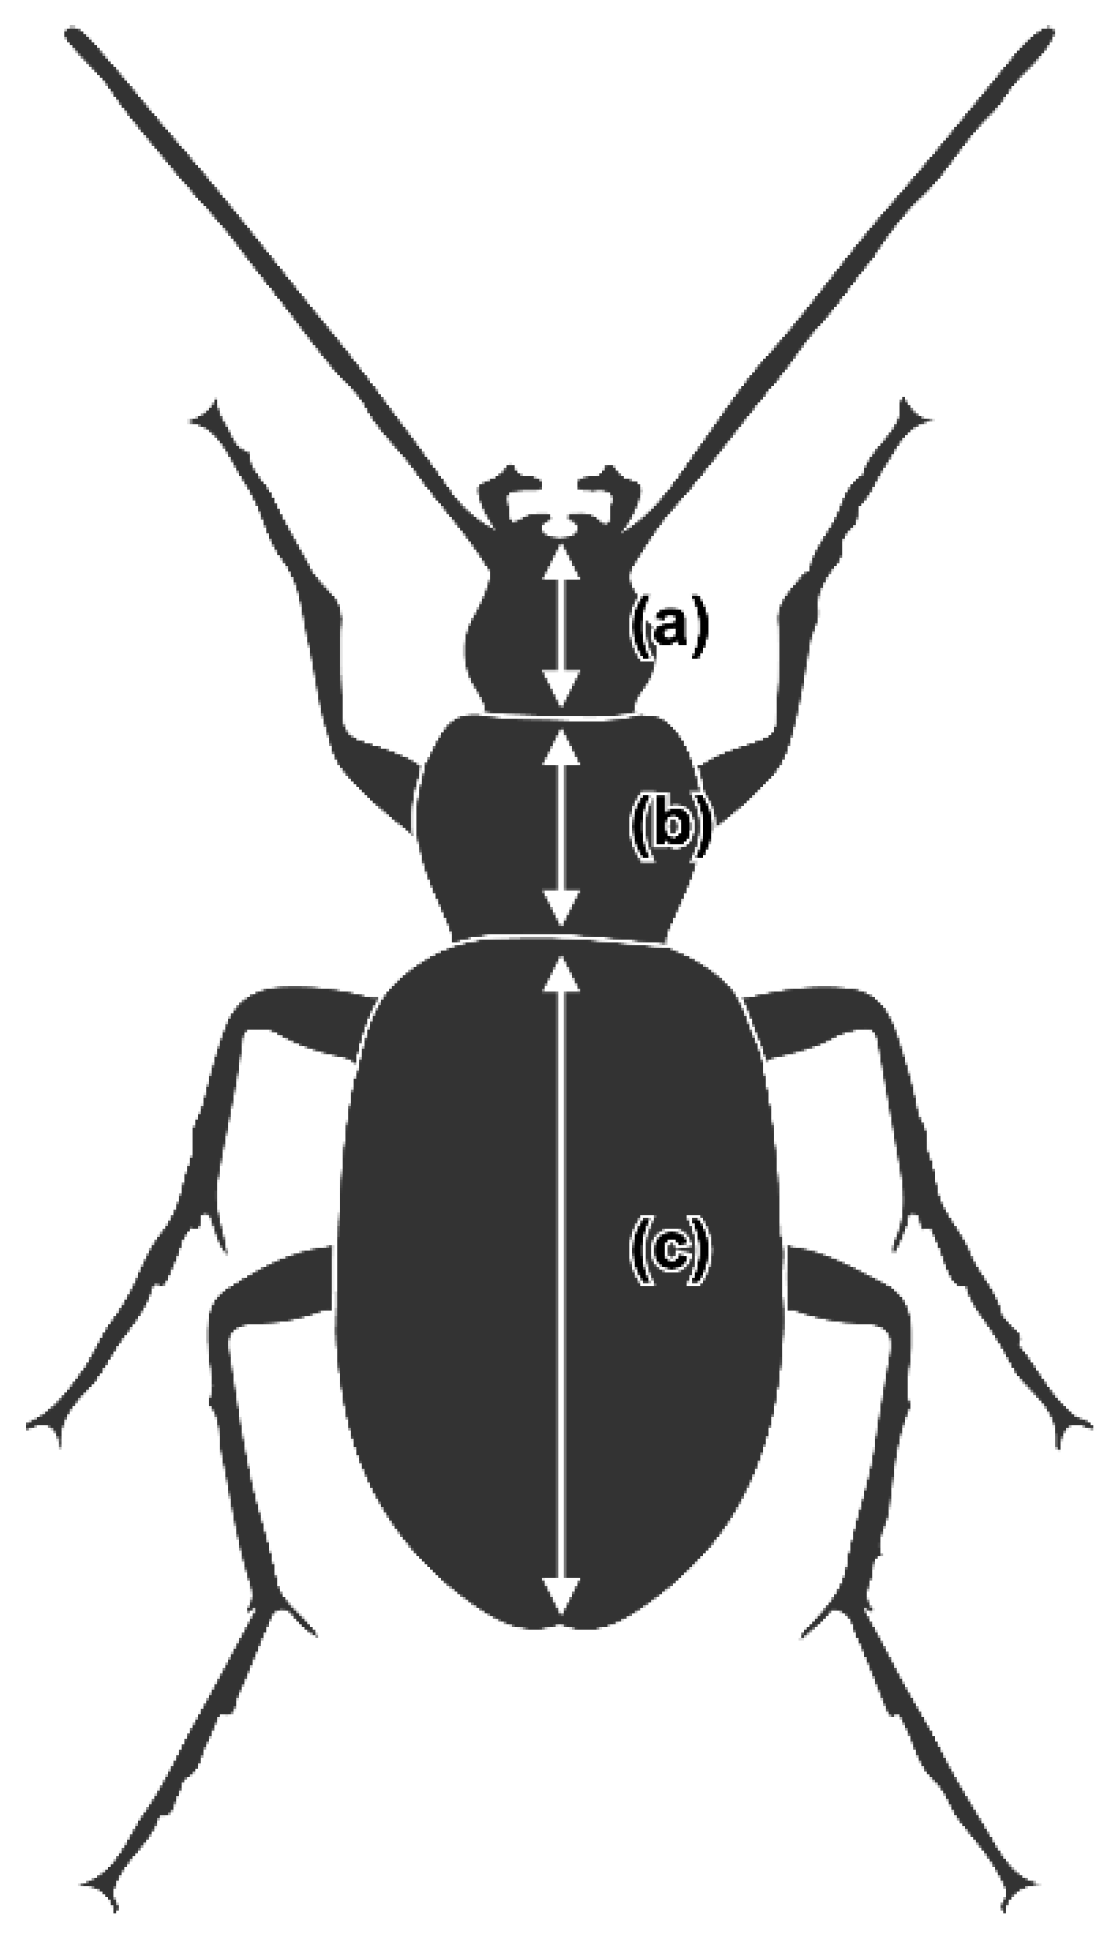 Ground Beetle Identification, Habits & Behavior